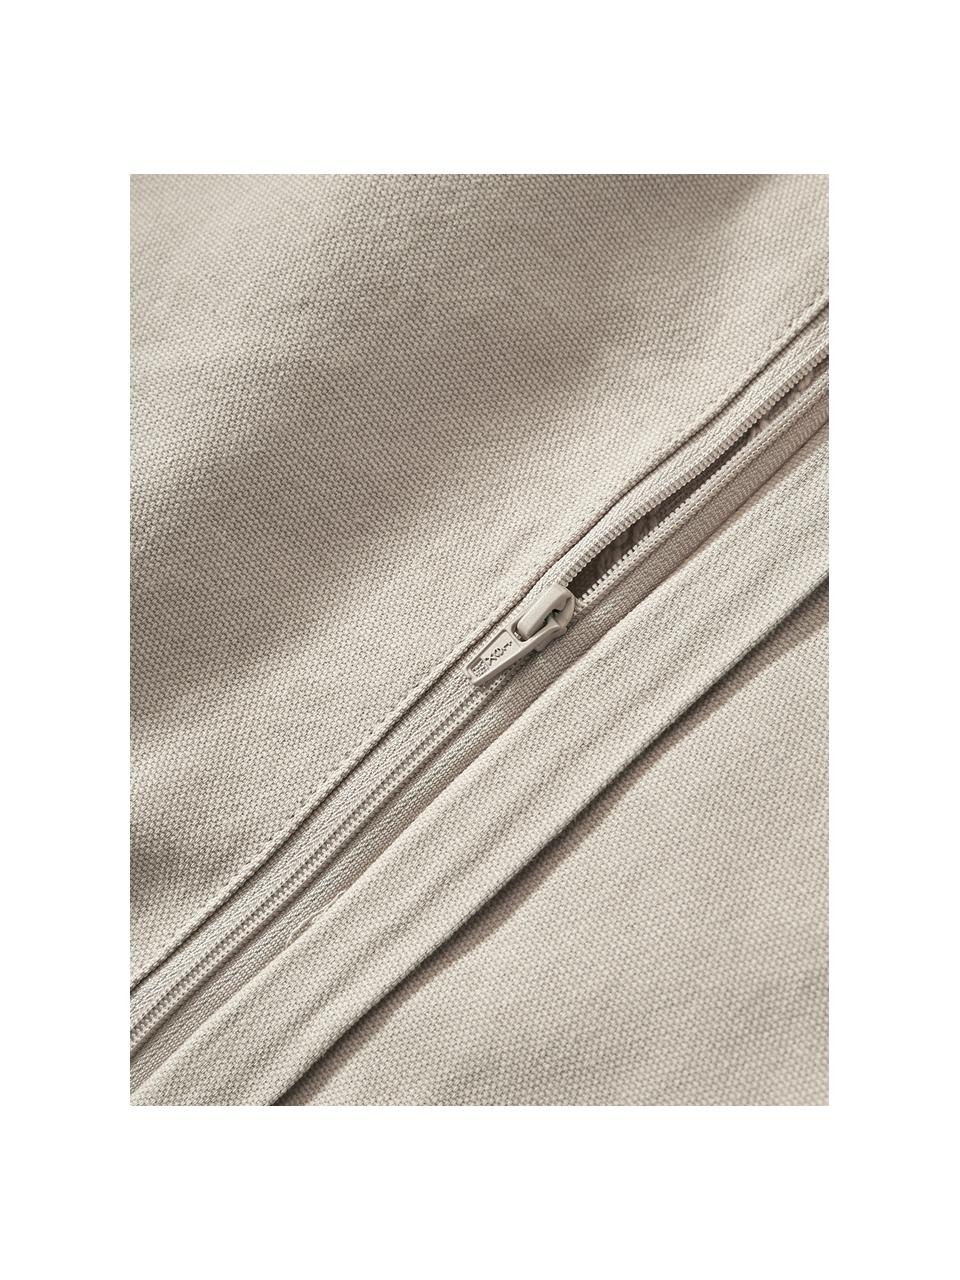 Baumwollperkal-Kissenhülle Faith mit getufteter Verzierung, 100% Baumwolle, Hellbeige, B 50 x L 50 cm